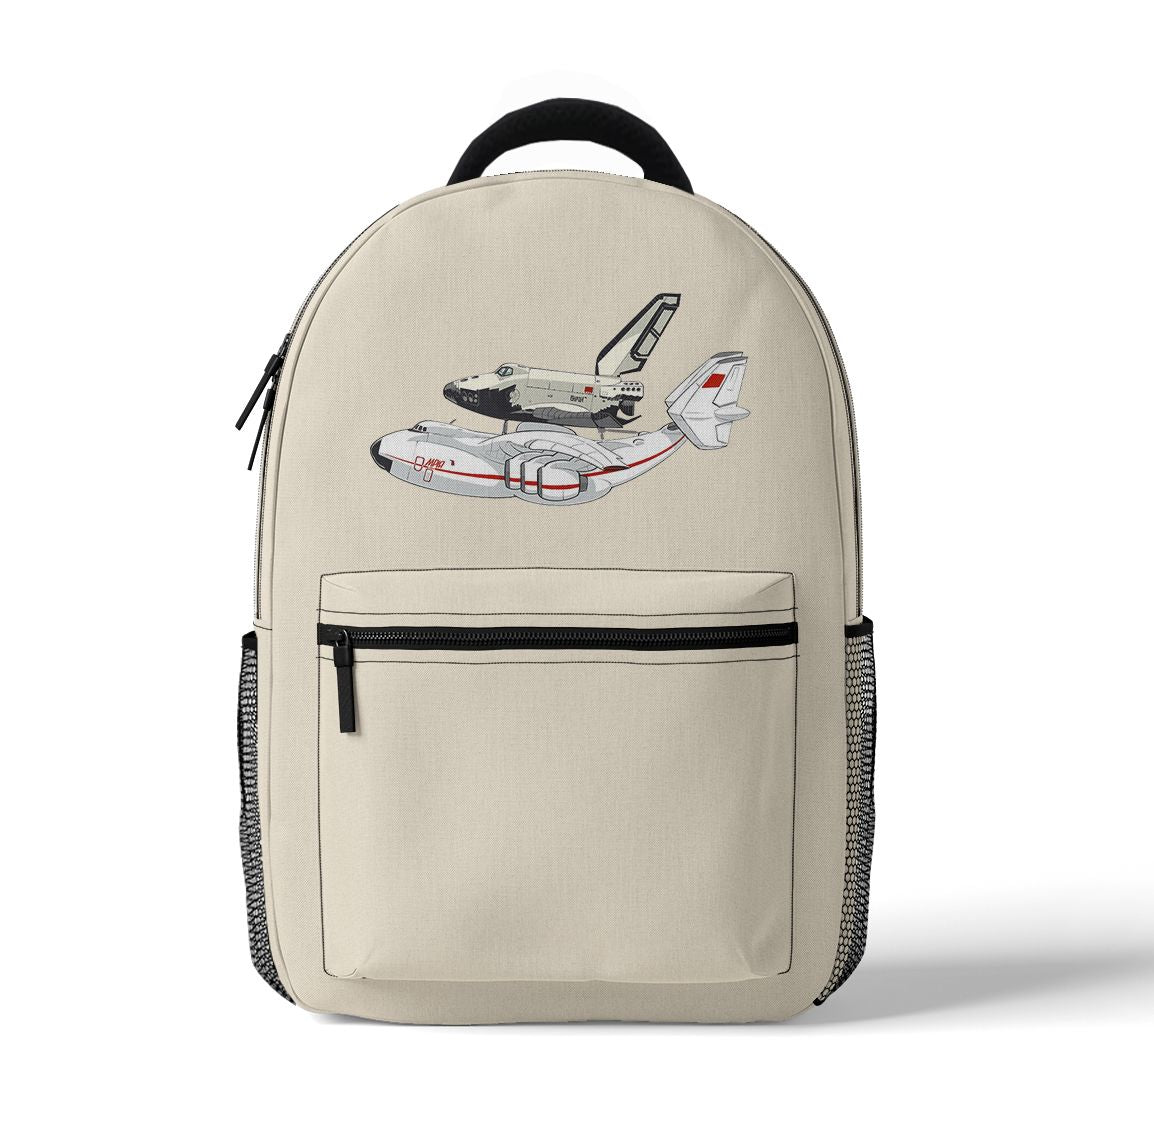 Buran & An-225 Designed 3D Backpacks